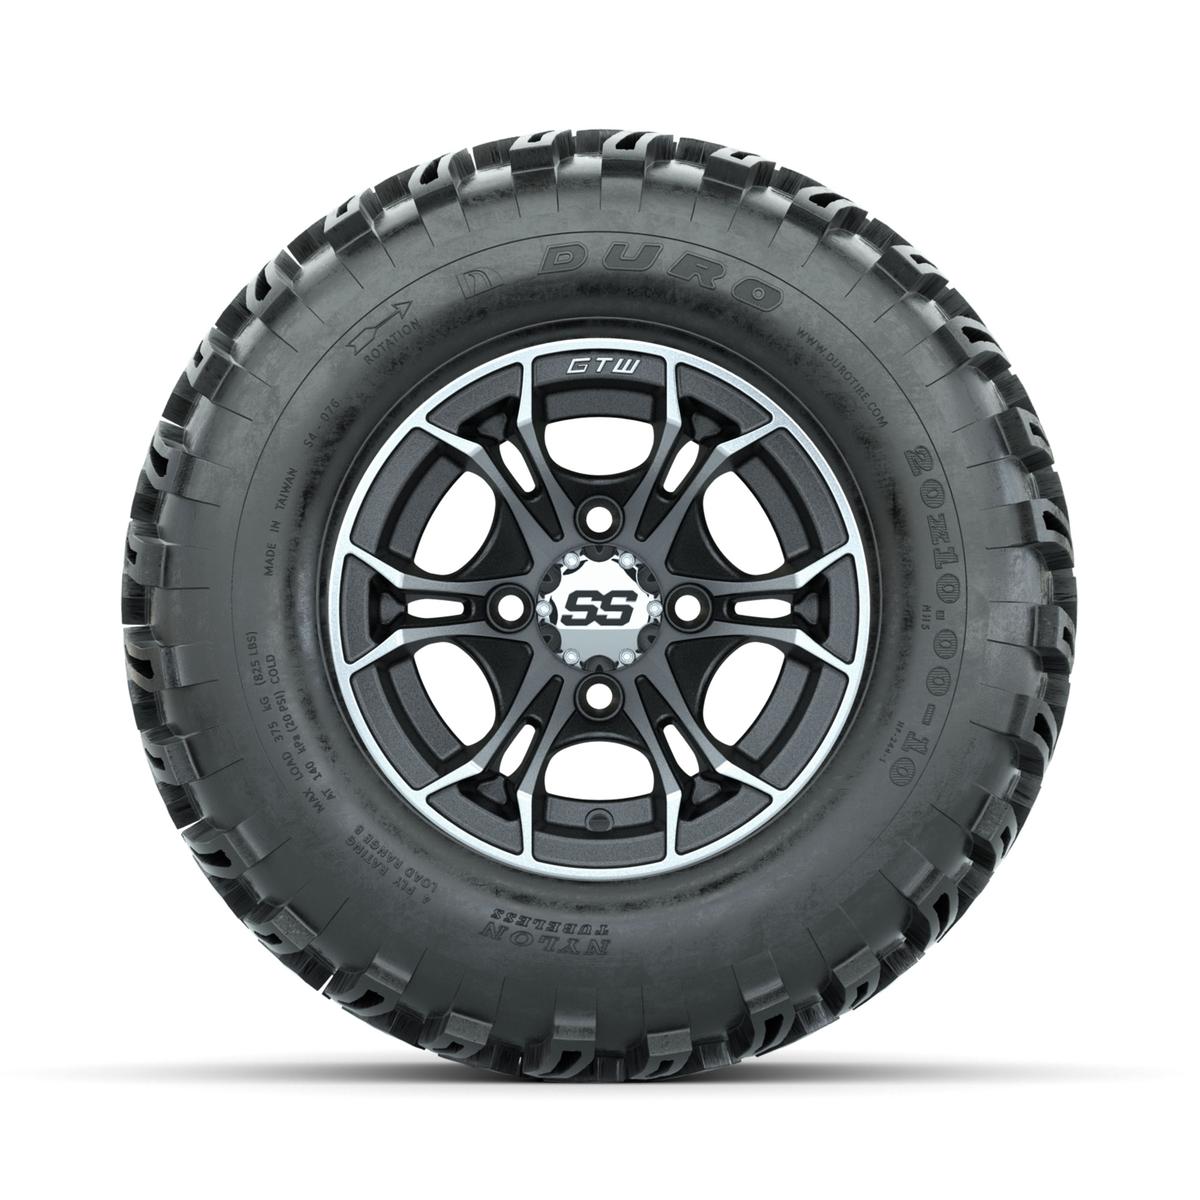 GTW Spyder Machined/Matte Grey 10 in Wheels with 20x10-10 Duro Desert All Terrain Tires – Full Set